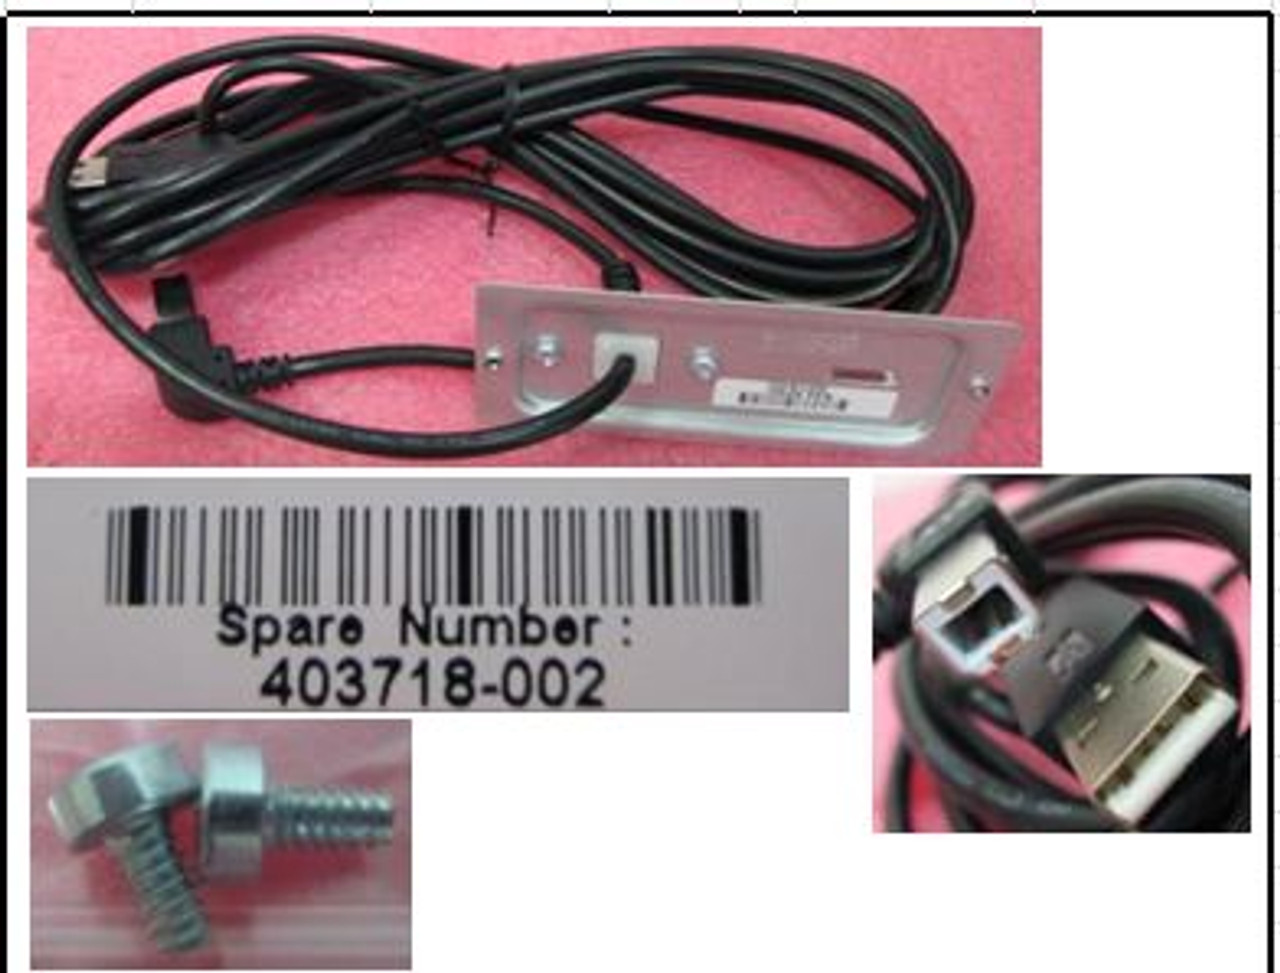 SPS-USB Cable Kit Rackmount - 403718-002